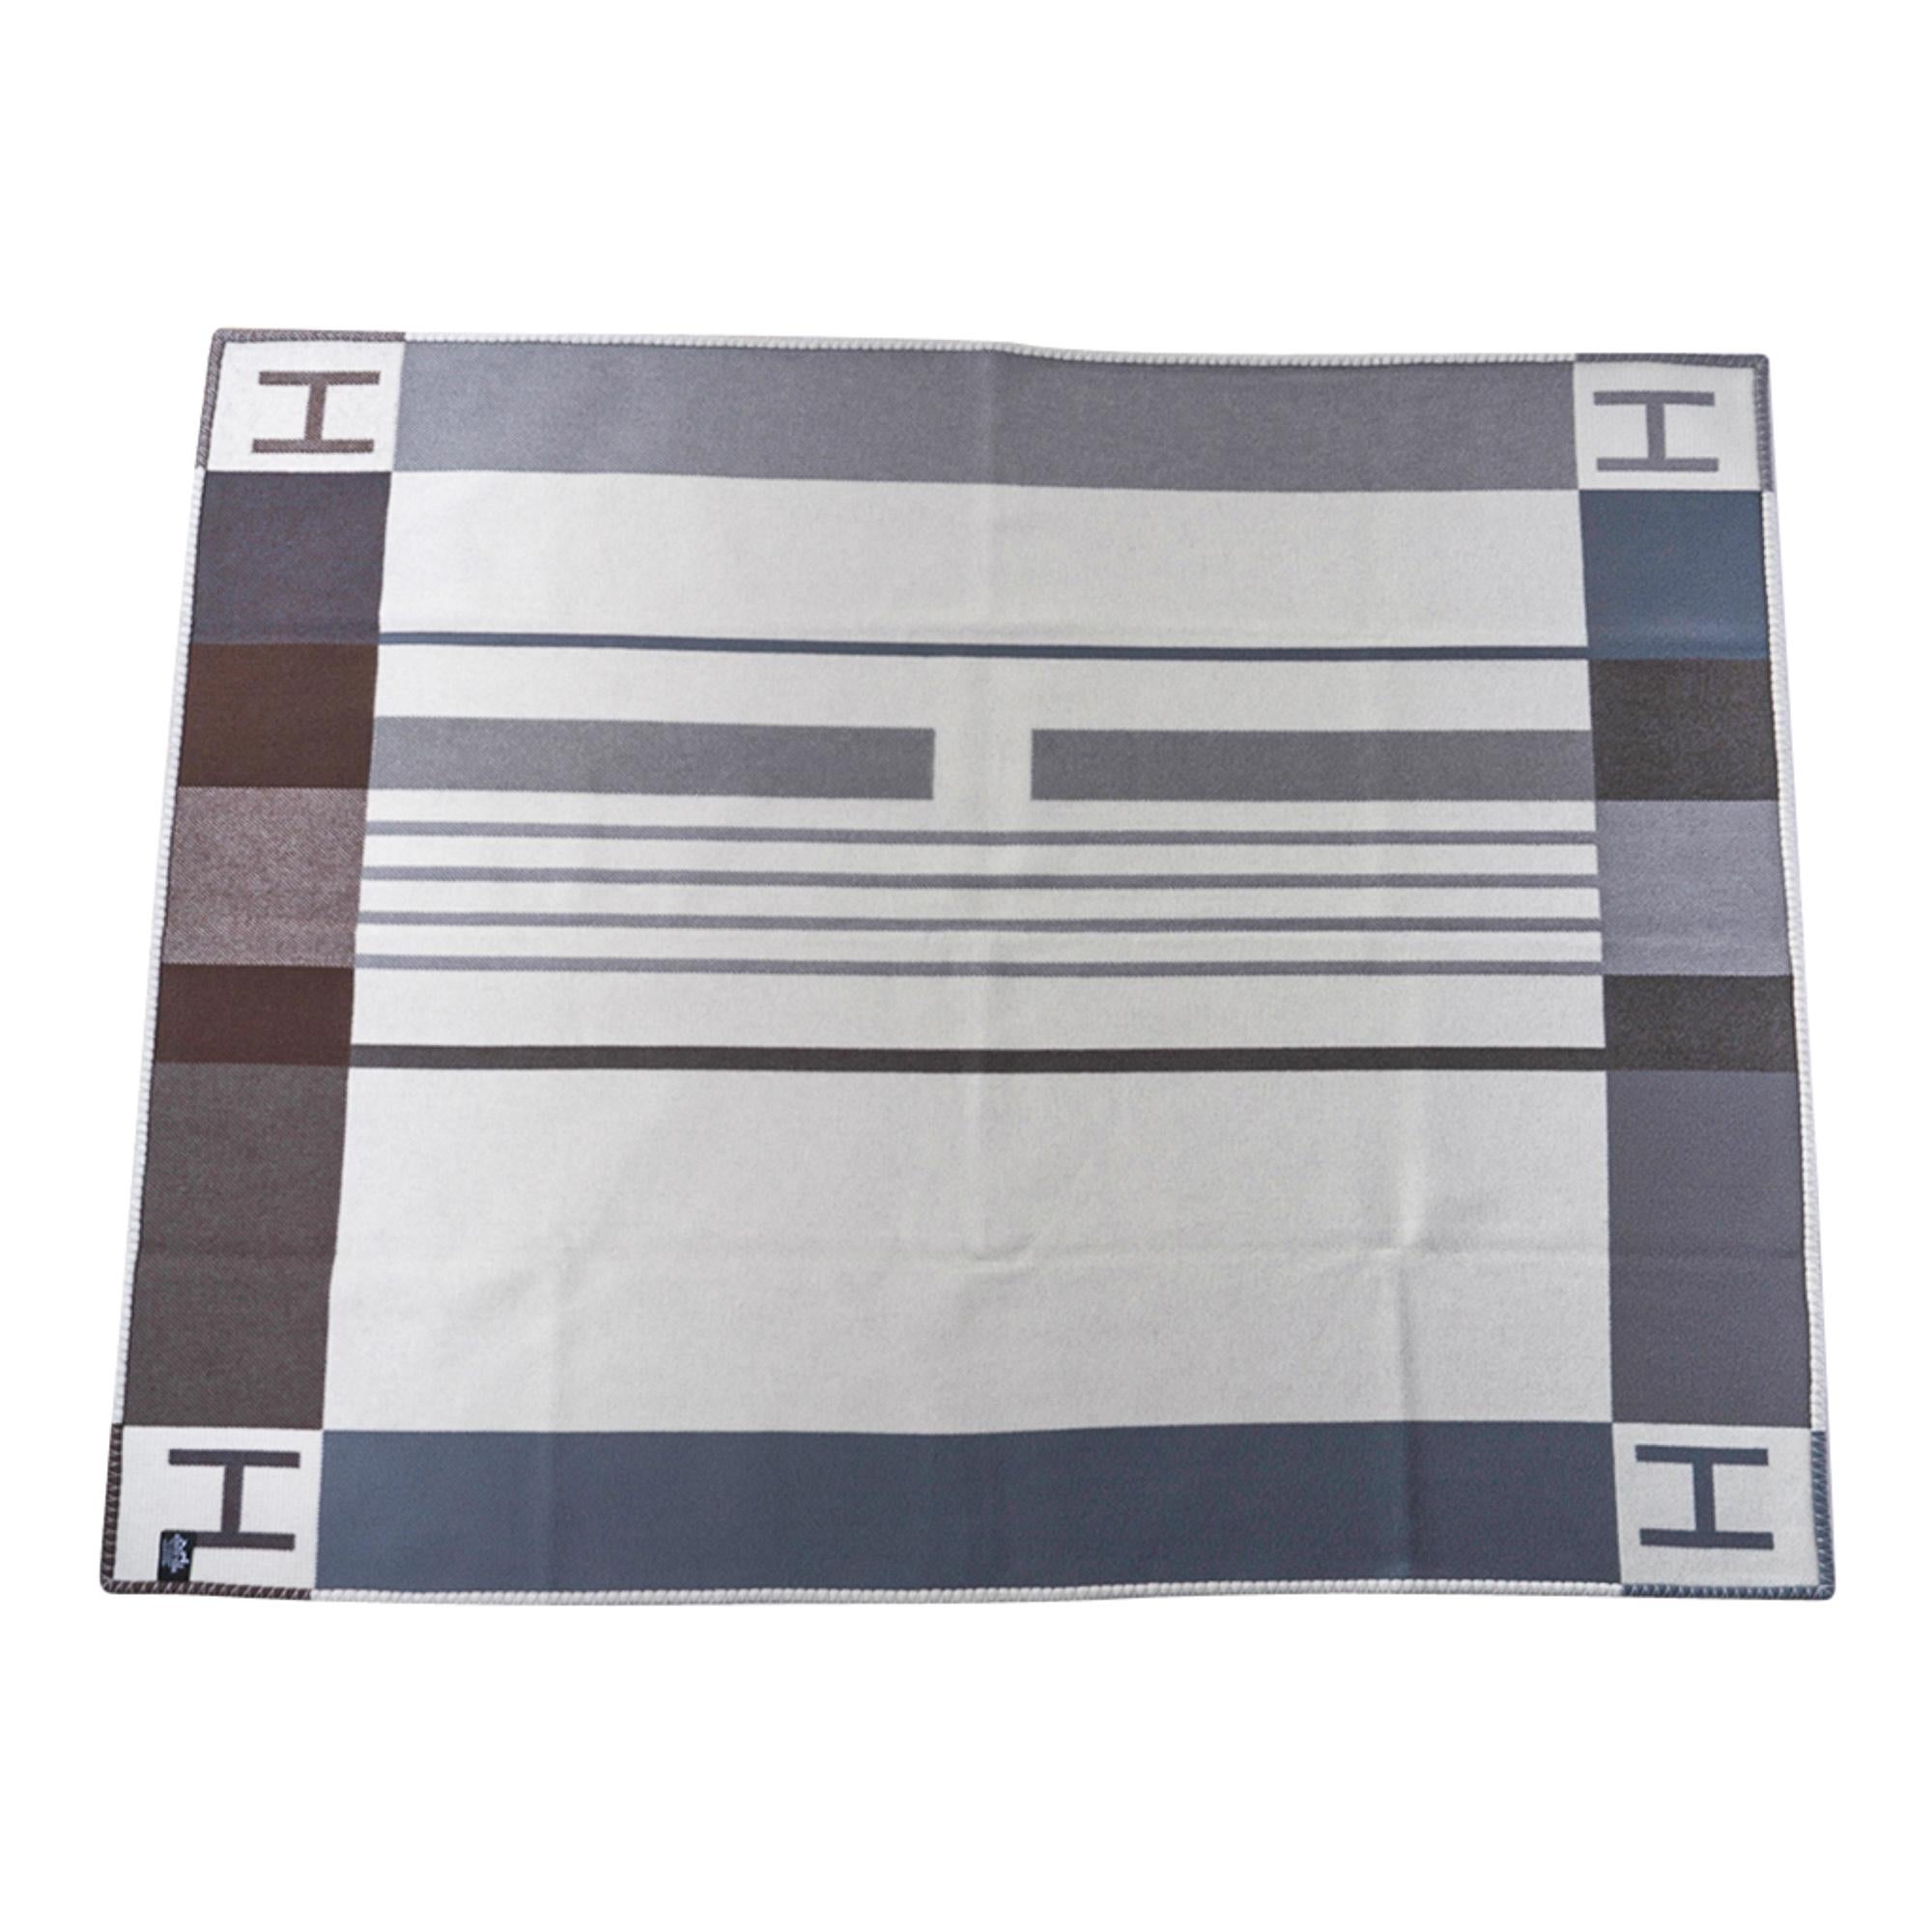 Hermes Avalon Vibration Throw Blanket Gris / Ecru Wool / Cashmere New 5